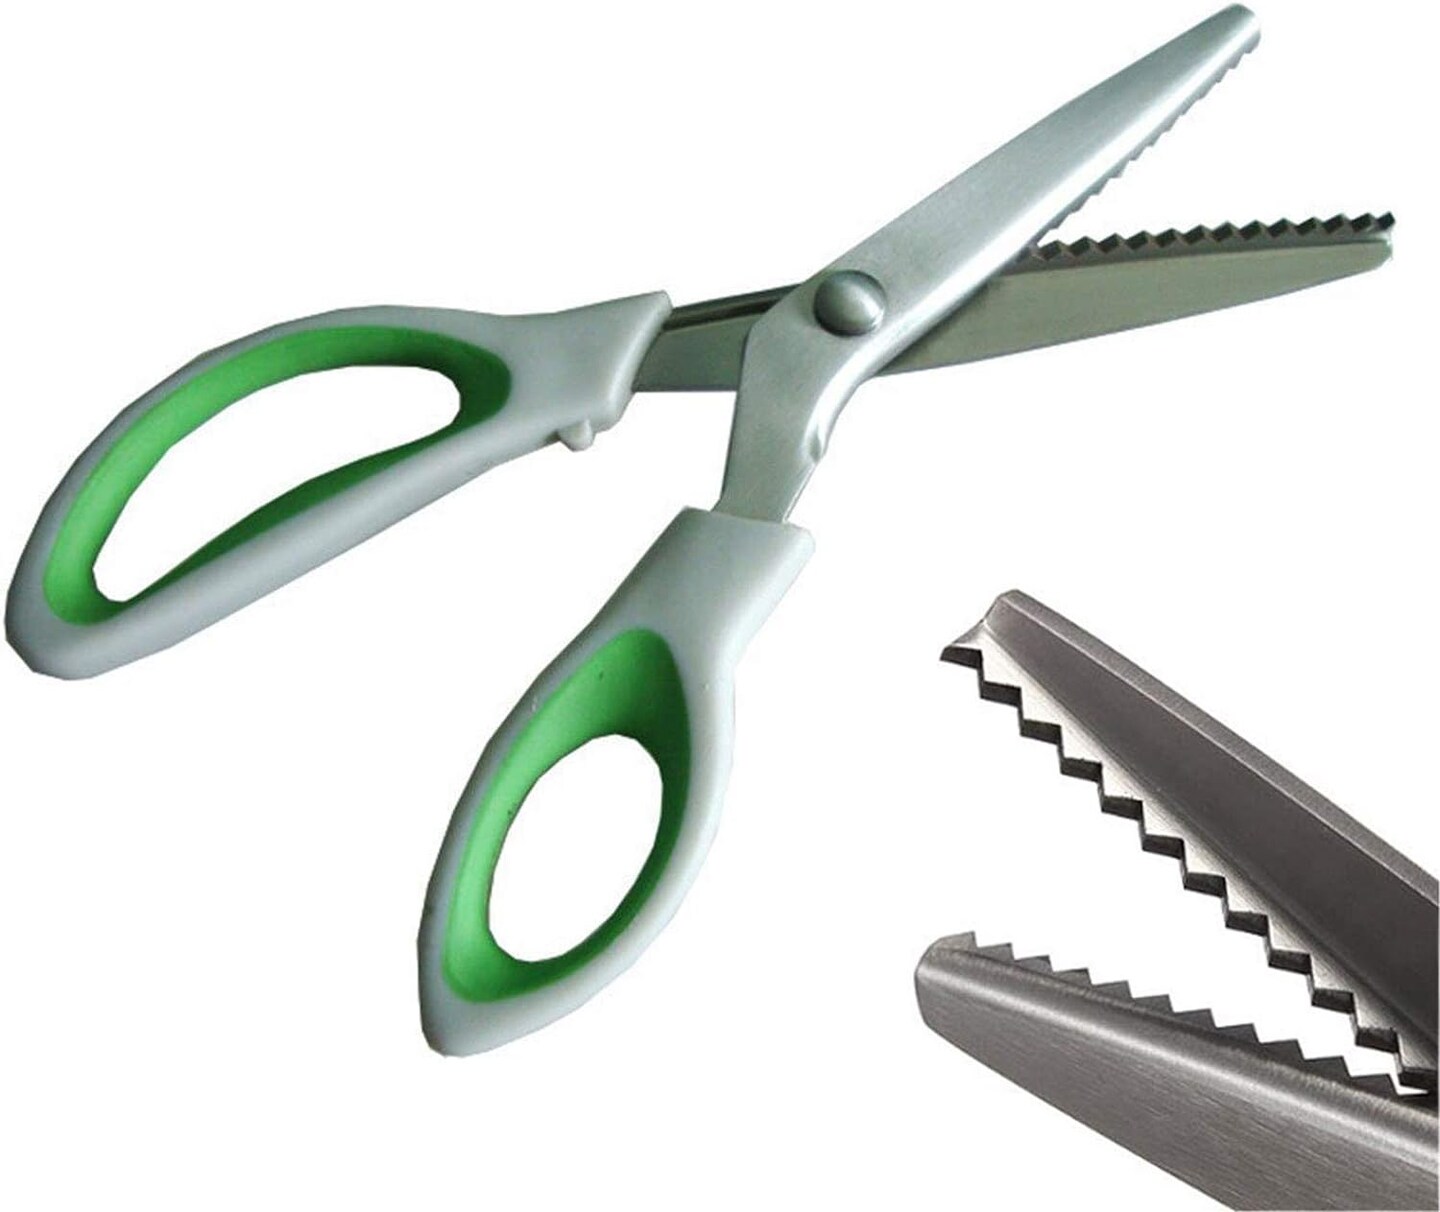 Green Pinking Shears Comfort Grips Crafts Zig Zag Cut Sewing Scissors,Professional Handheld Dressmaking